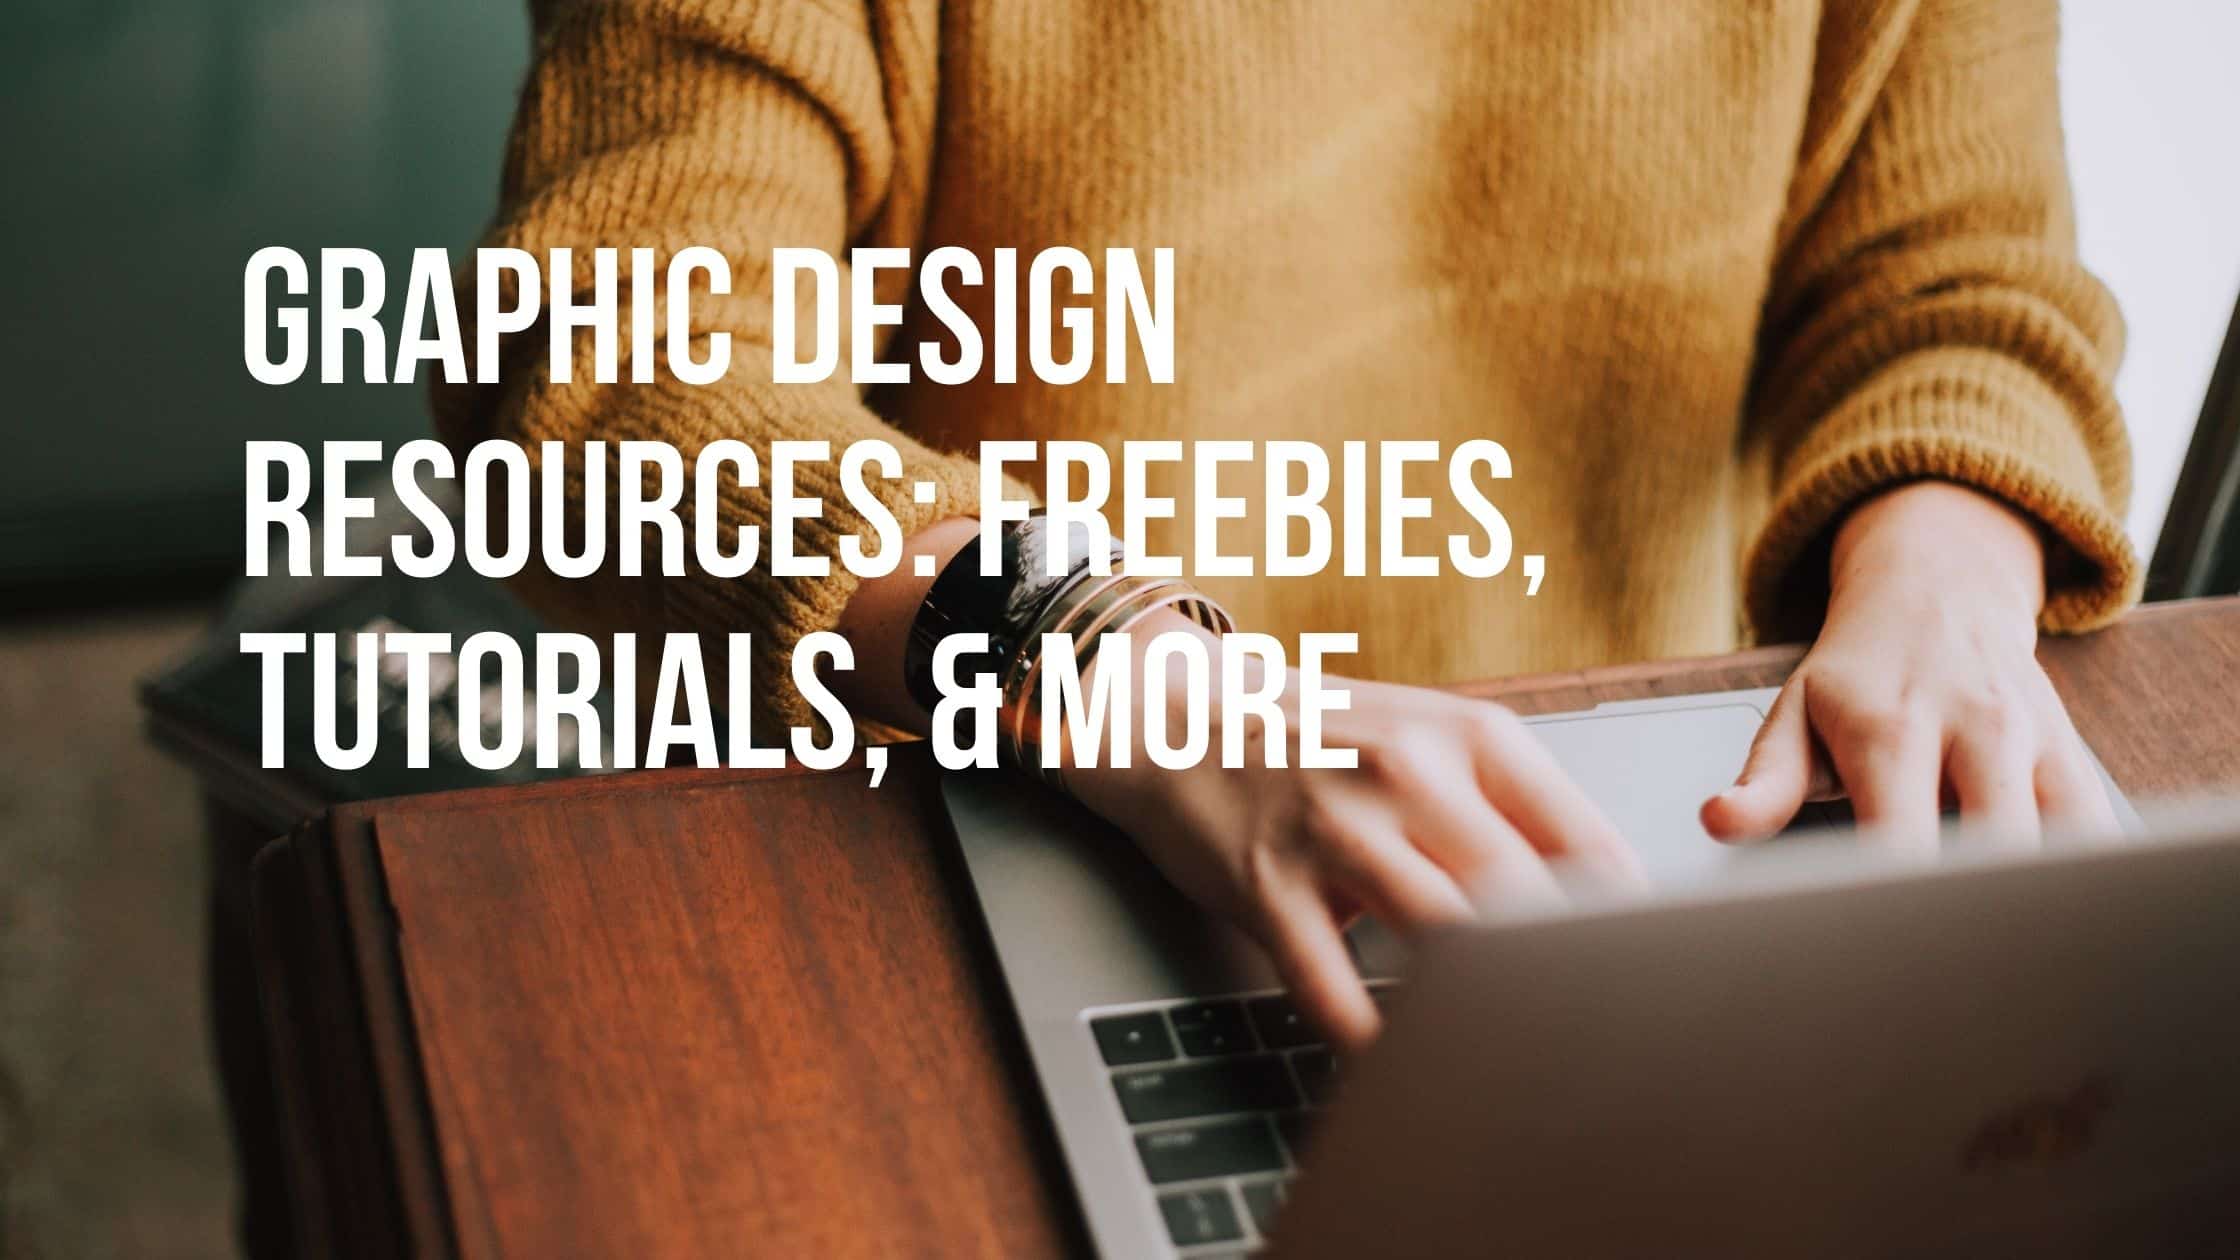 Graphic Design Resources: Freebies, Tutorials, & More